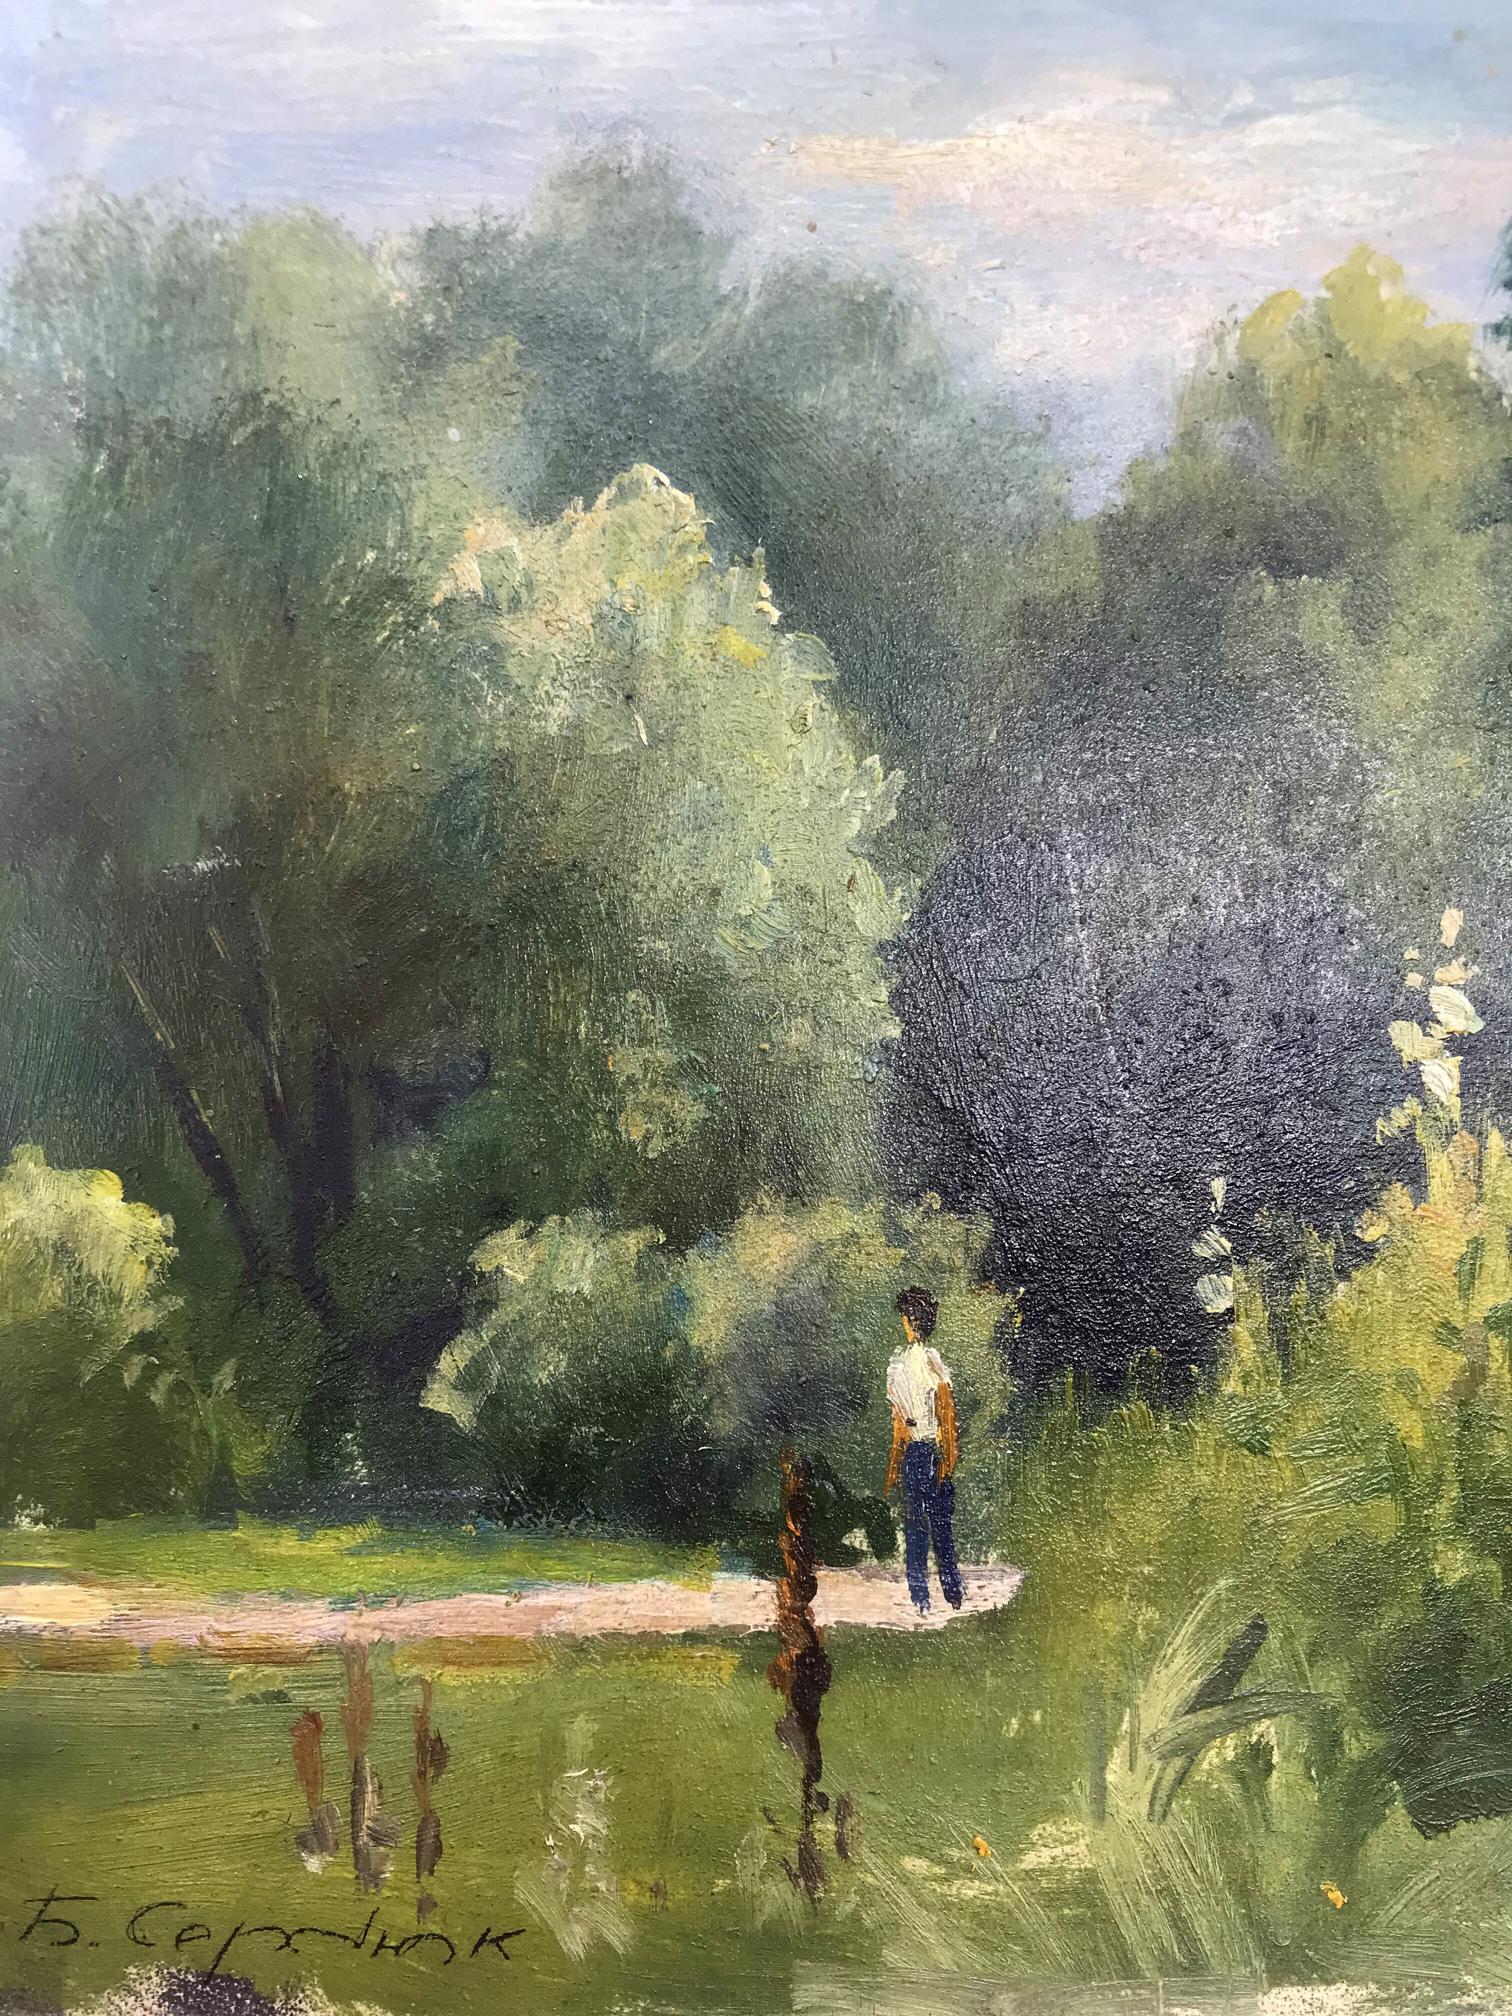 Boris Serdyuk's oil painting capturing a "Walk"